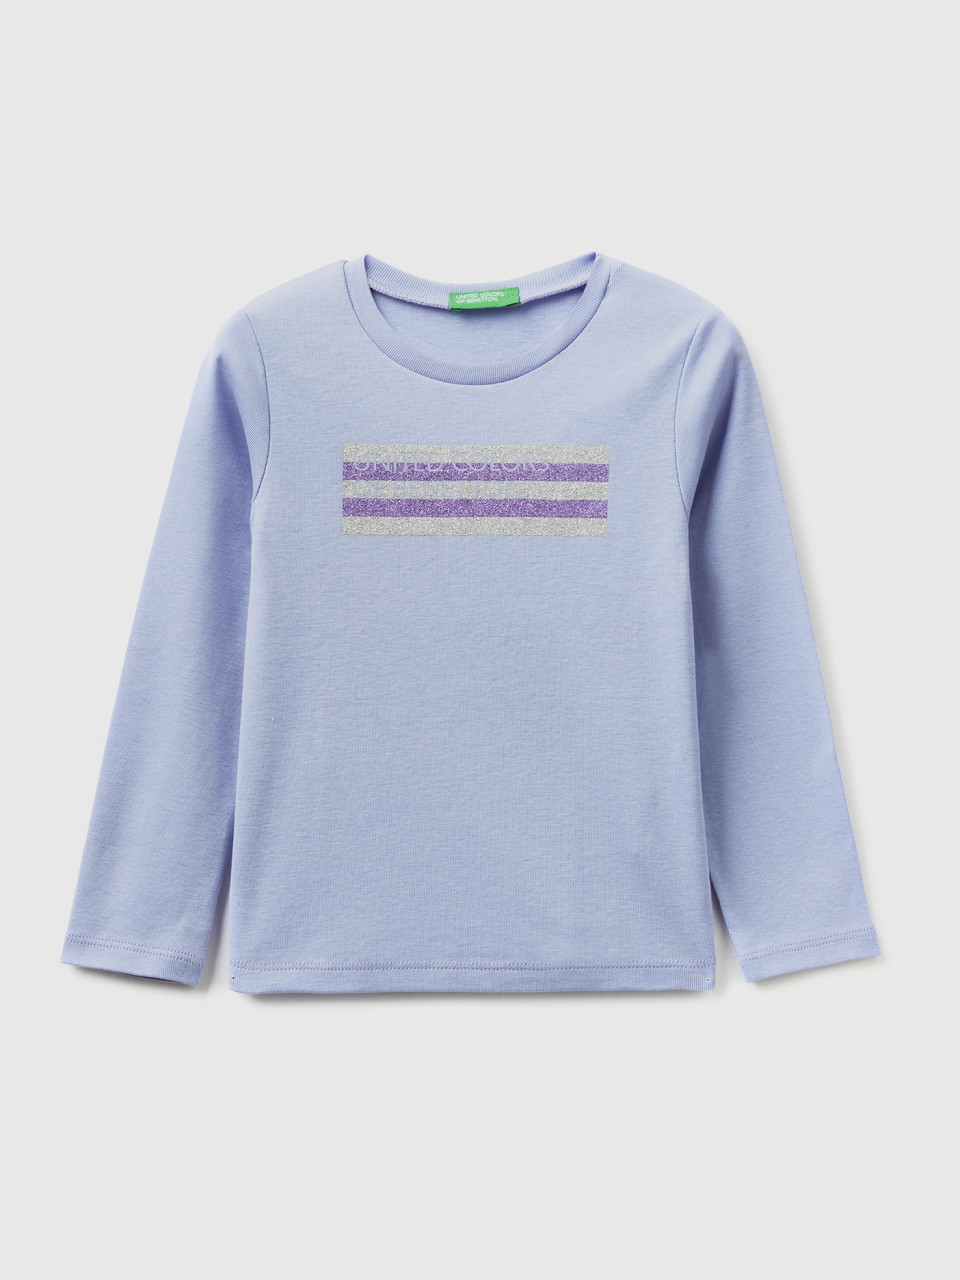 Benetton, Long Sleeve T-shirt With Glitter Print, Lilac, Kids